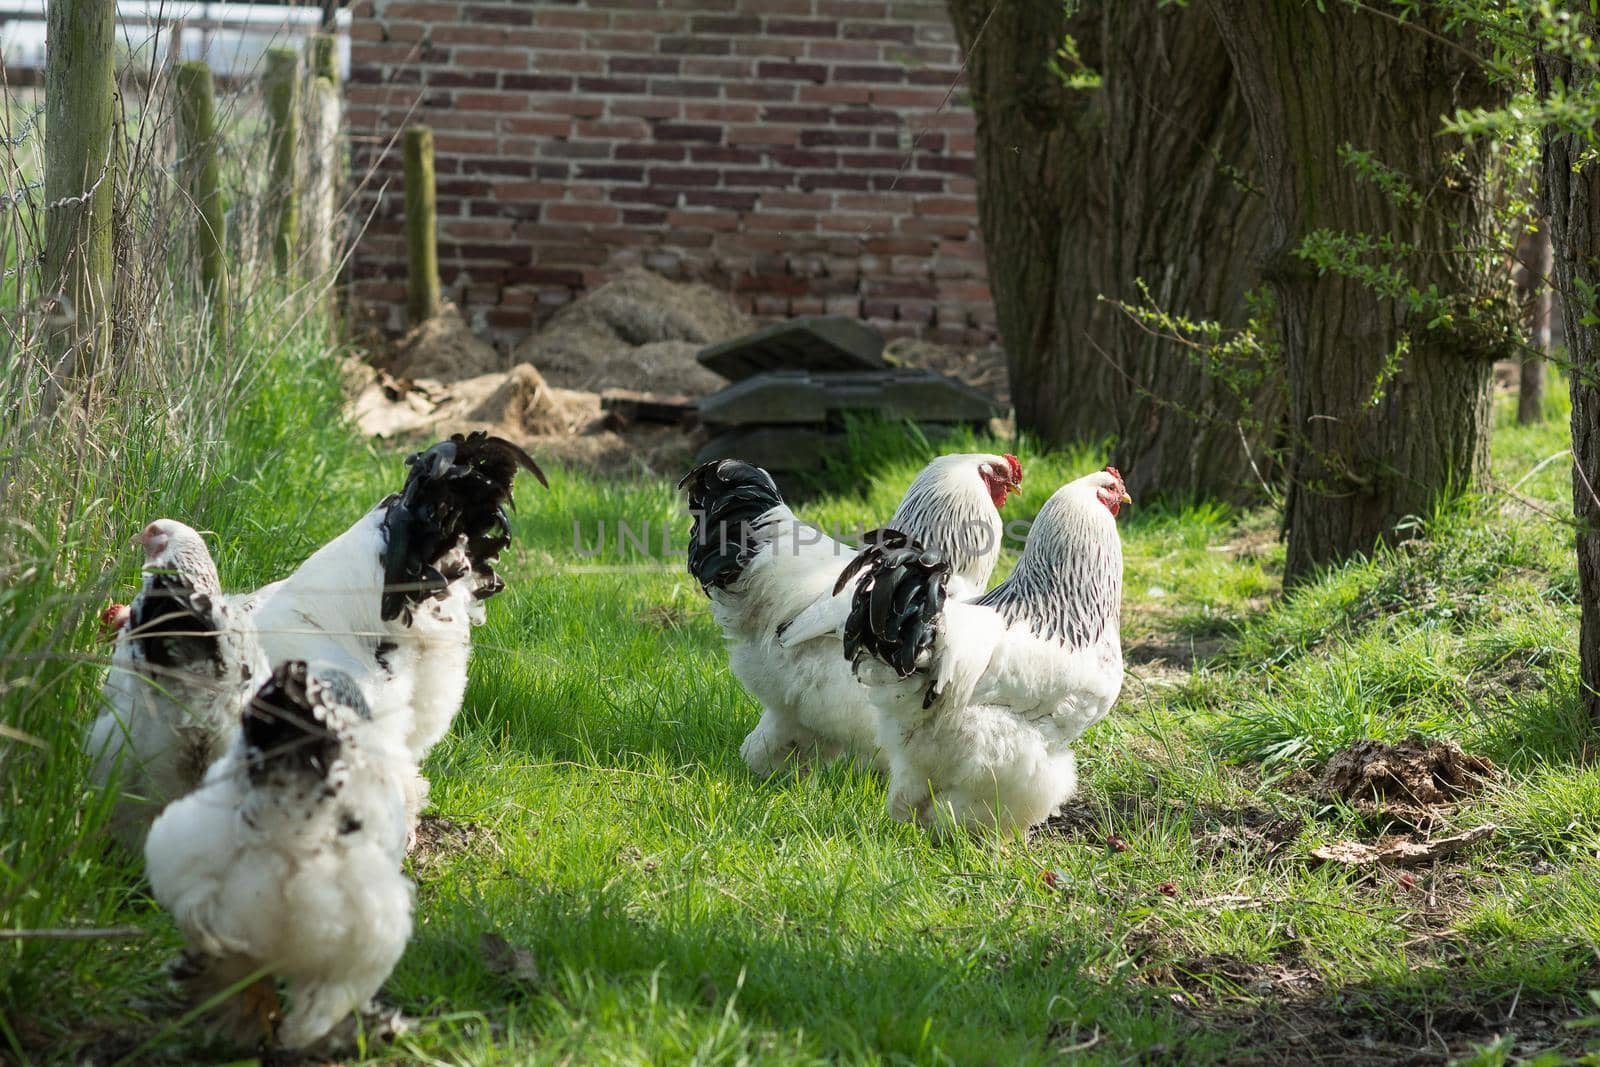 Free range Brahma chickens, hens and roosters, in a garden by LeoniekvanderVliet